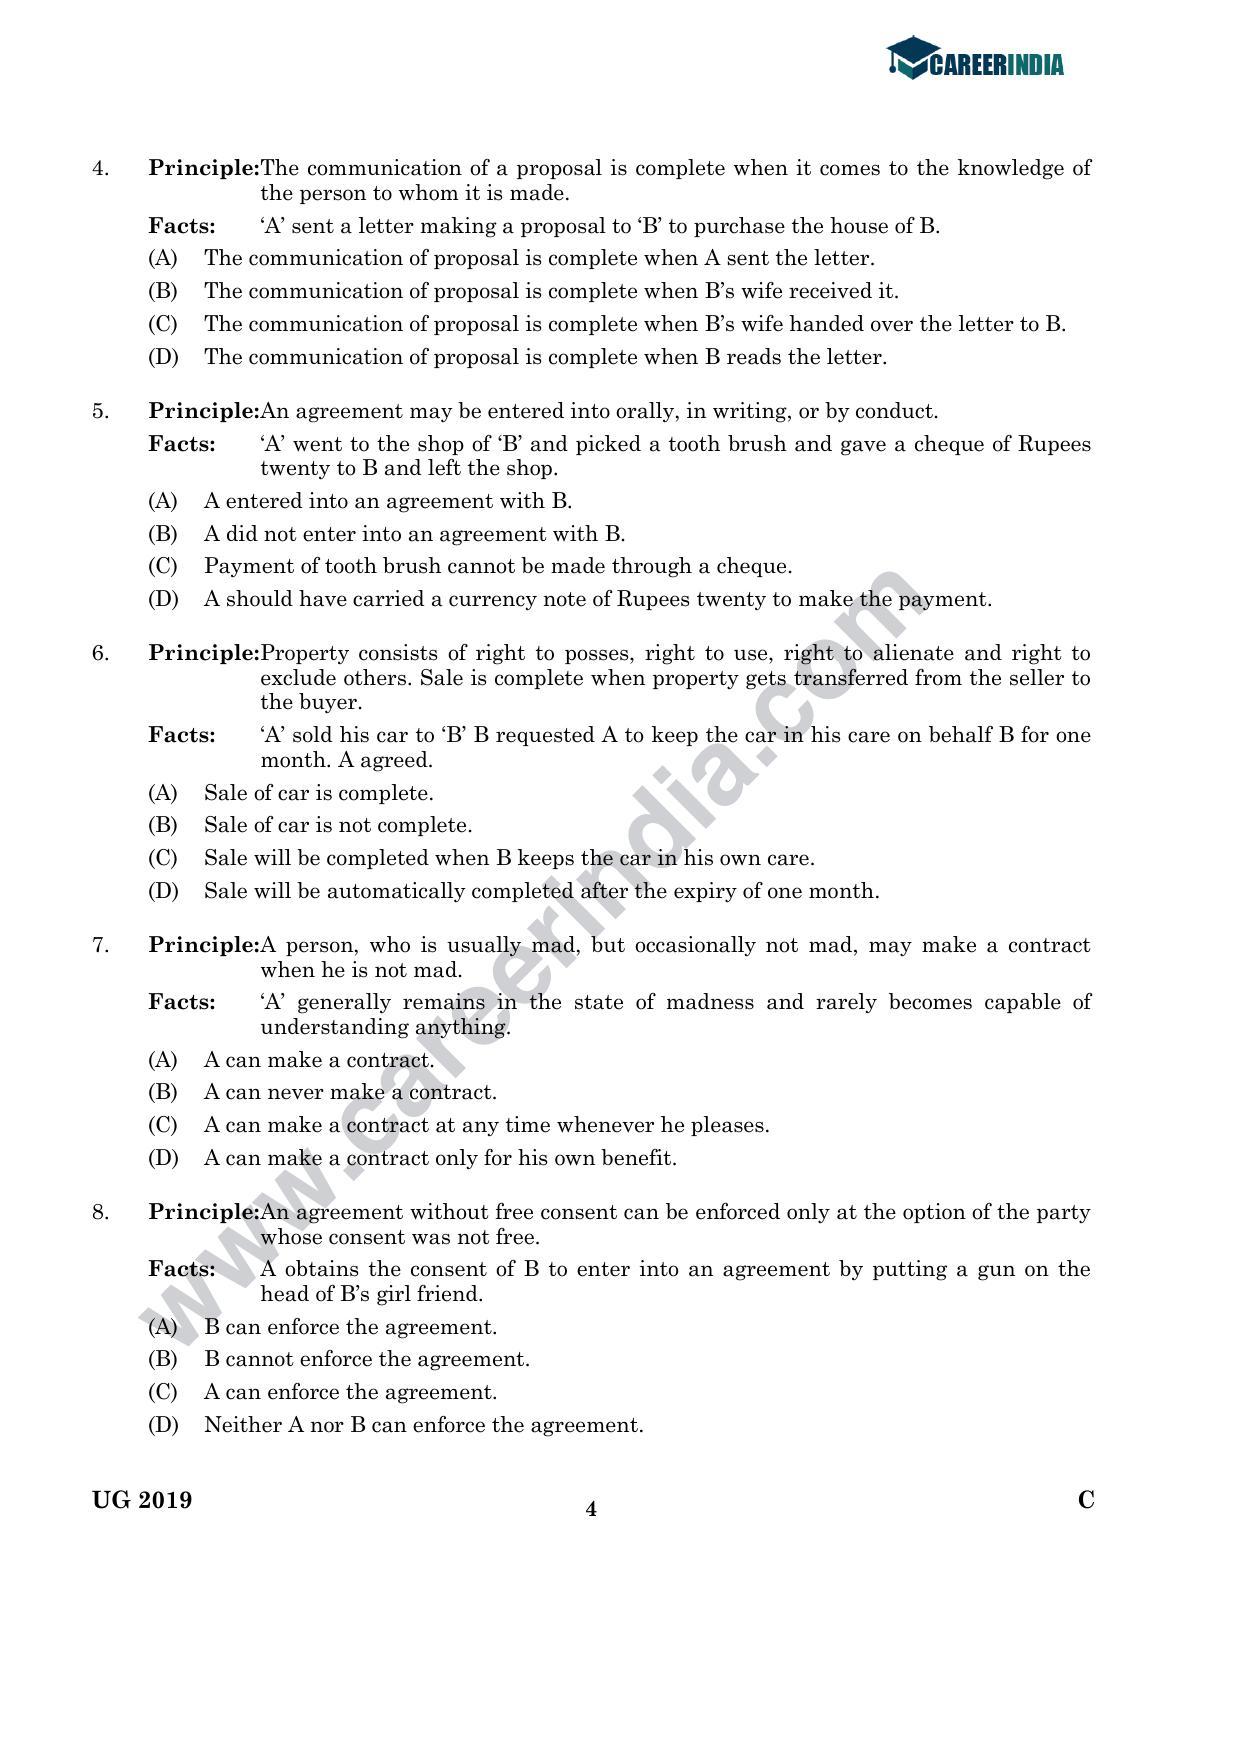 CLAT 2019 UG Legal-Aptitude Question Paper - Page 3